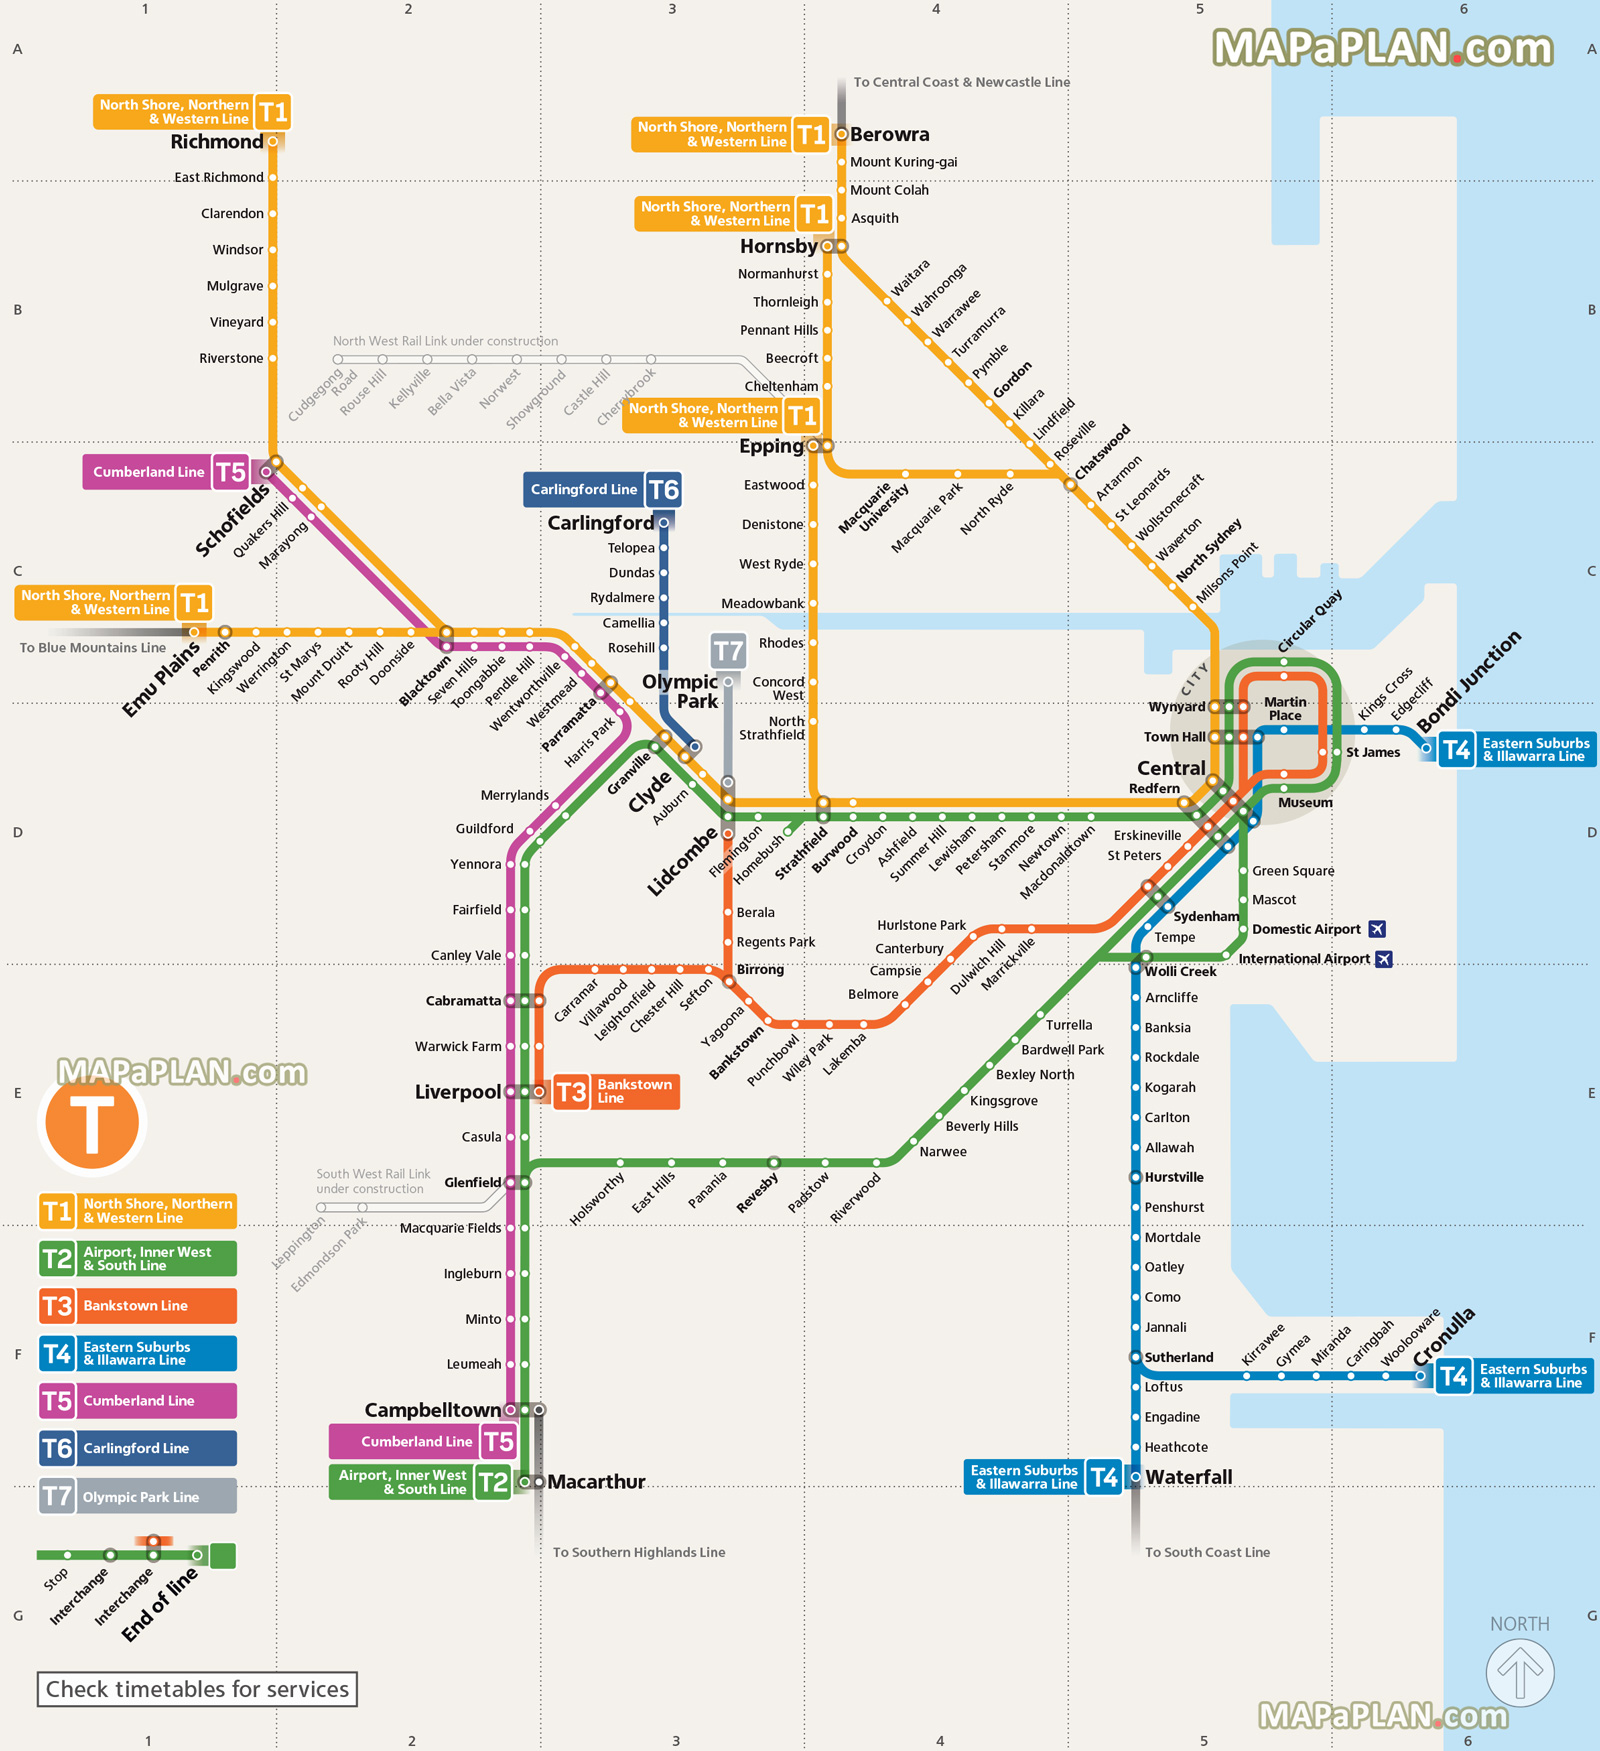 official public transport rail network diagram stations train lines t1 t2 t3 t4 t5 t5 t6 t7 metro area Sydney top tourist attractions map